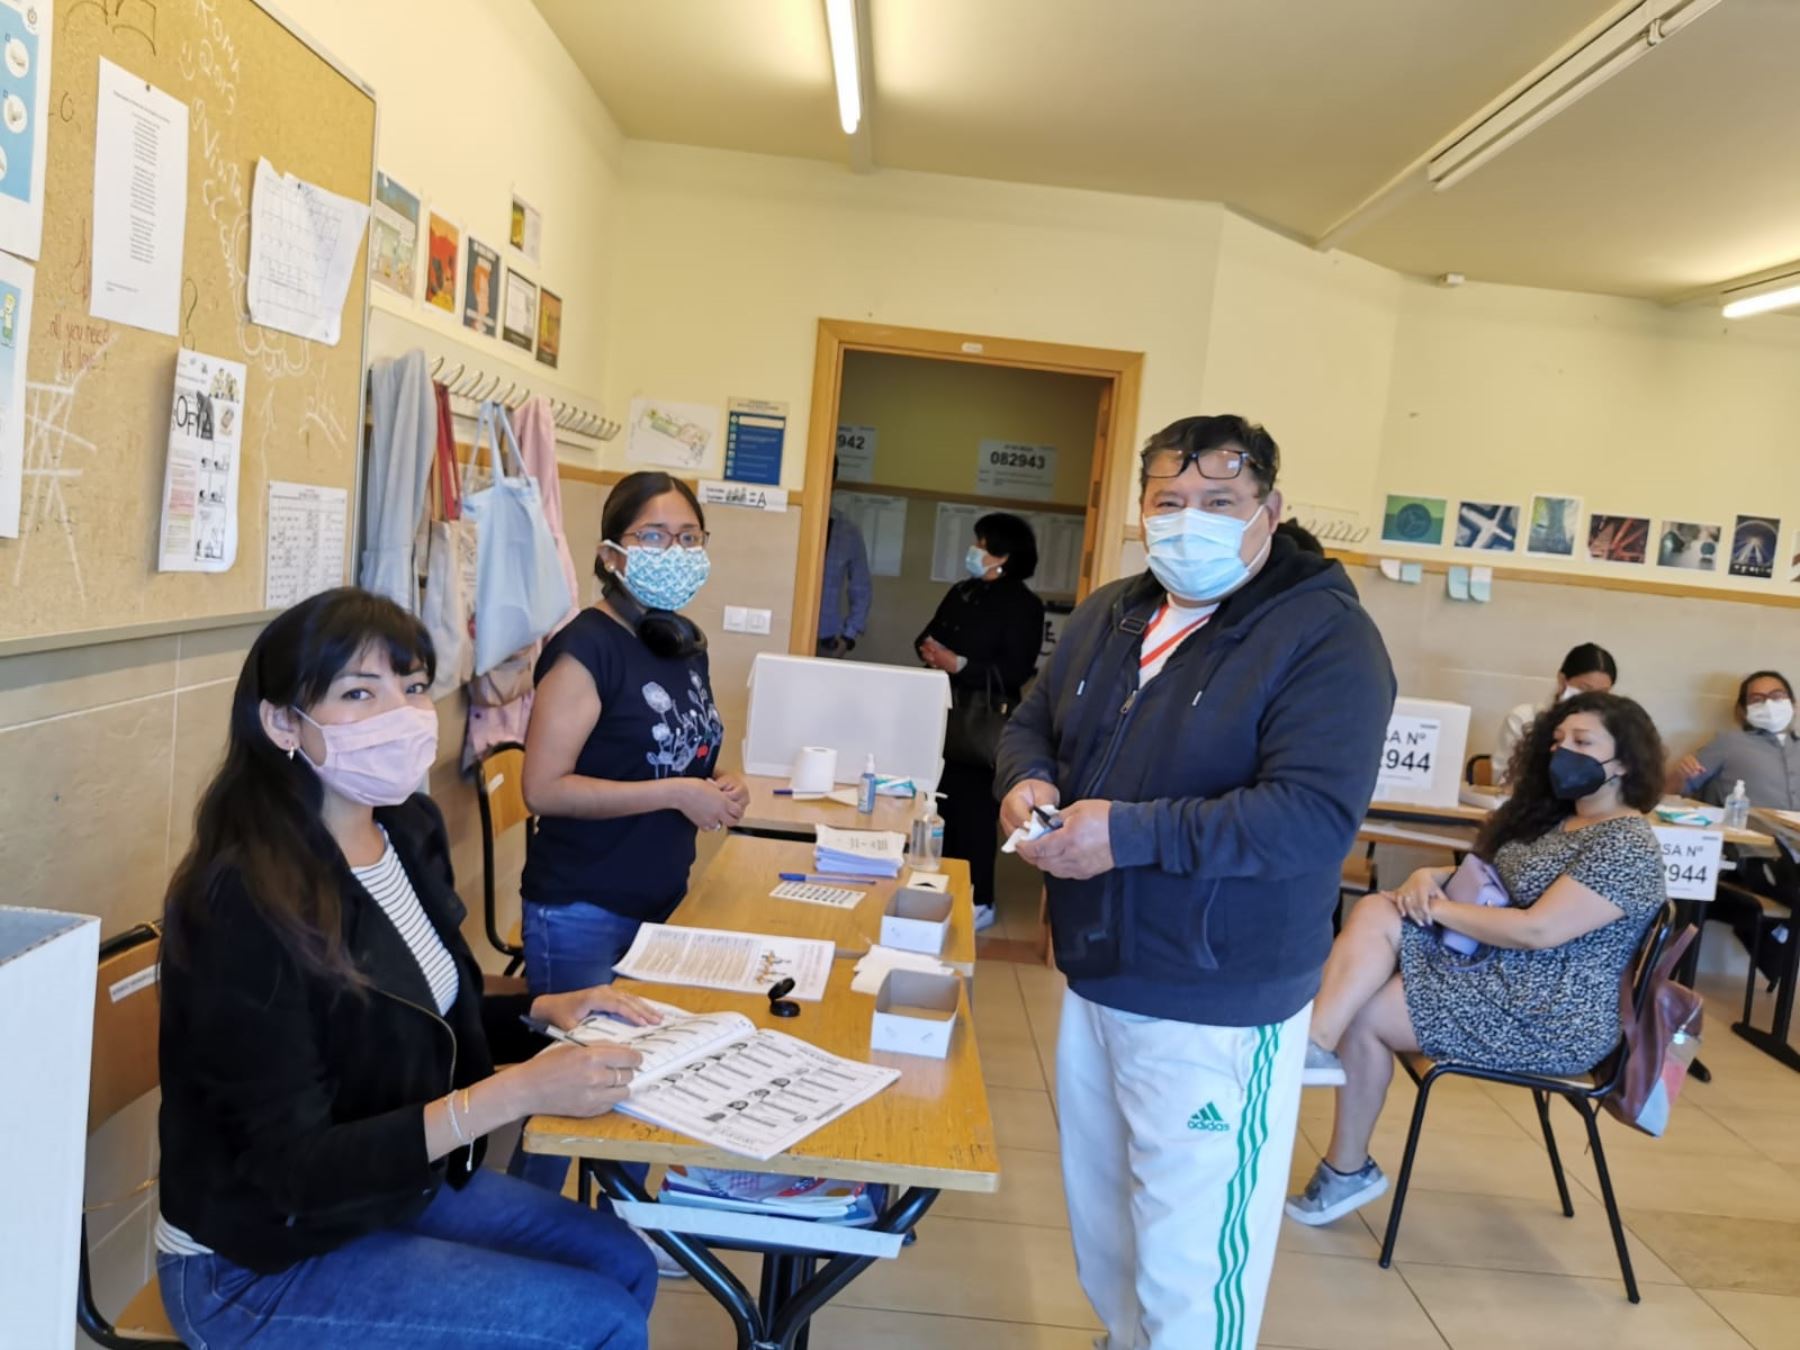 Peruanos que residen en diversas ciudades de Europa acuden a votar en esta segunda vuelta electoral, informó el Ministerio de Relaciones Exteriores. ANDINA/Difusión